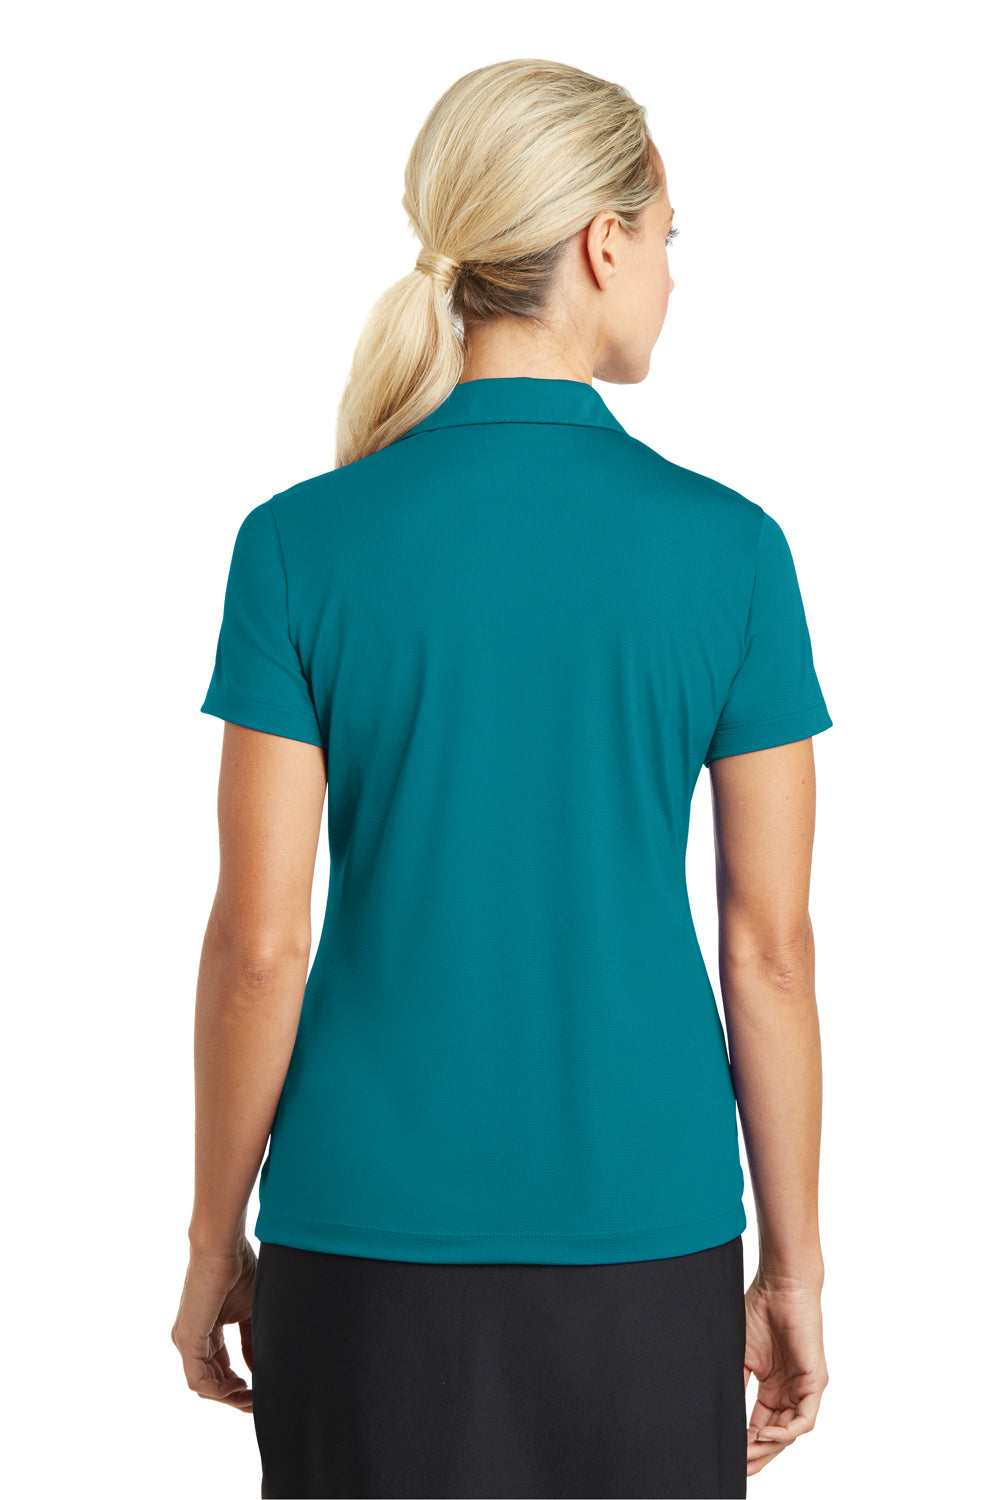 Nike 637165 Womens Dri-Fit Moisture Wicking Short Sleeve Polo Shirt Blustery Green Model Back